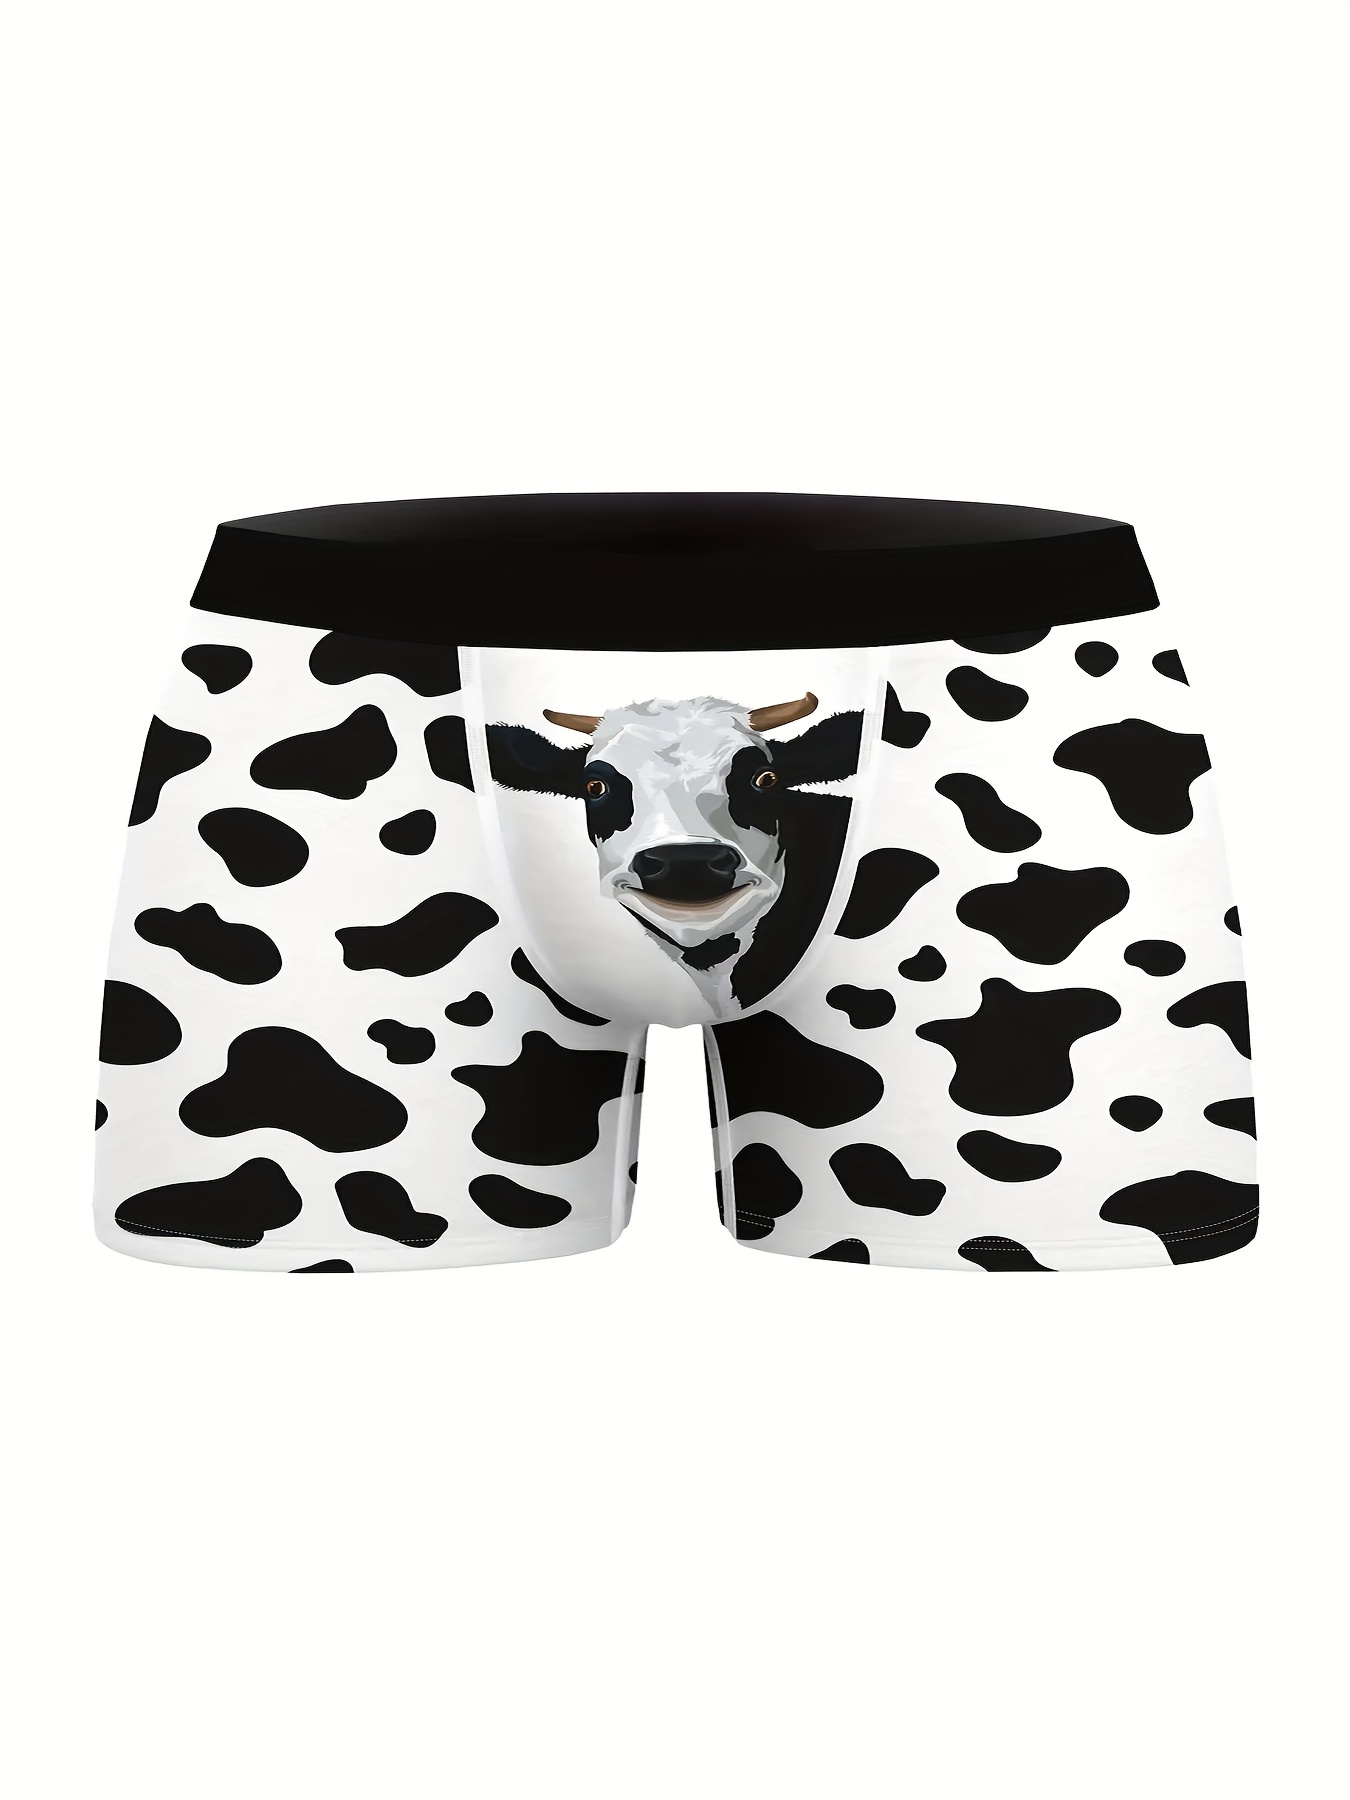 Loose Hello Kitty Panties Male Cartoon Pattern Shorts Pure Cotton Soft Boxer  Kawaii Boyfriend Underwear Briefs Clothes Gifts 